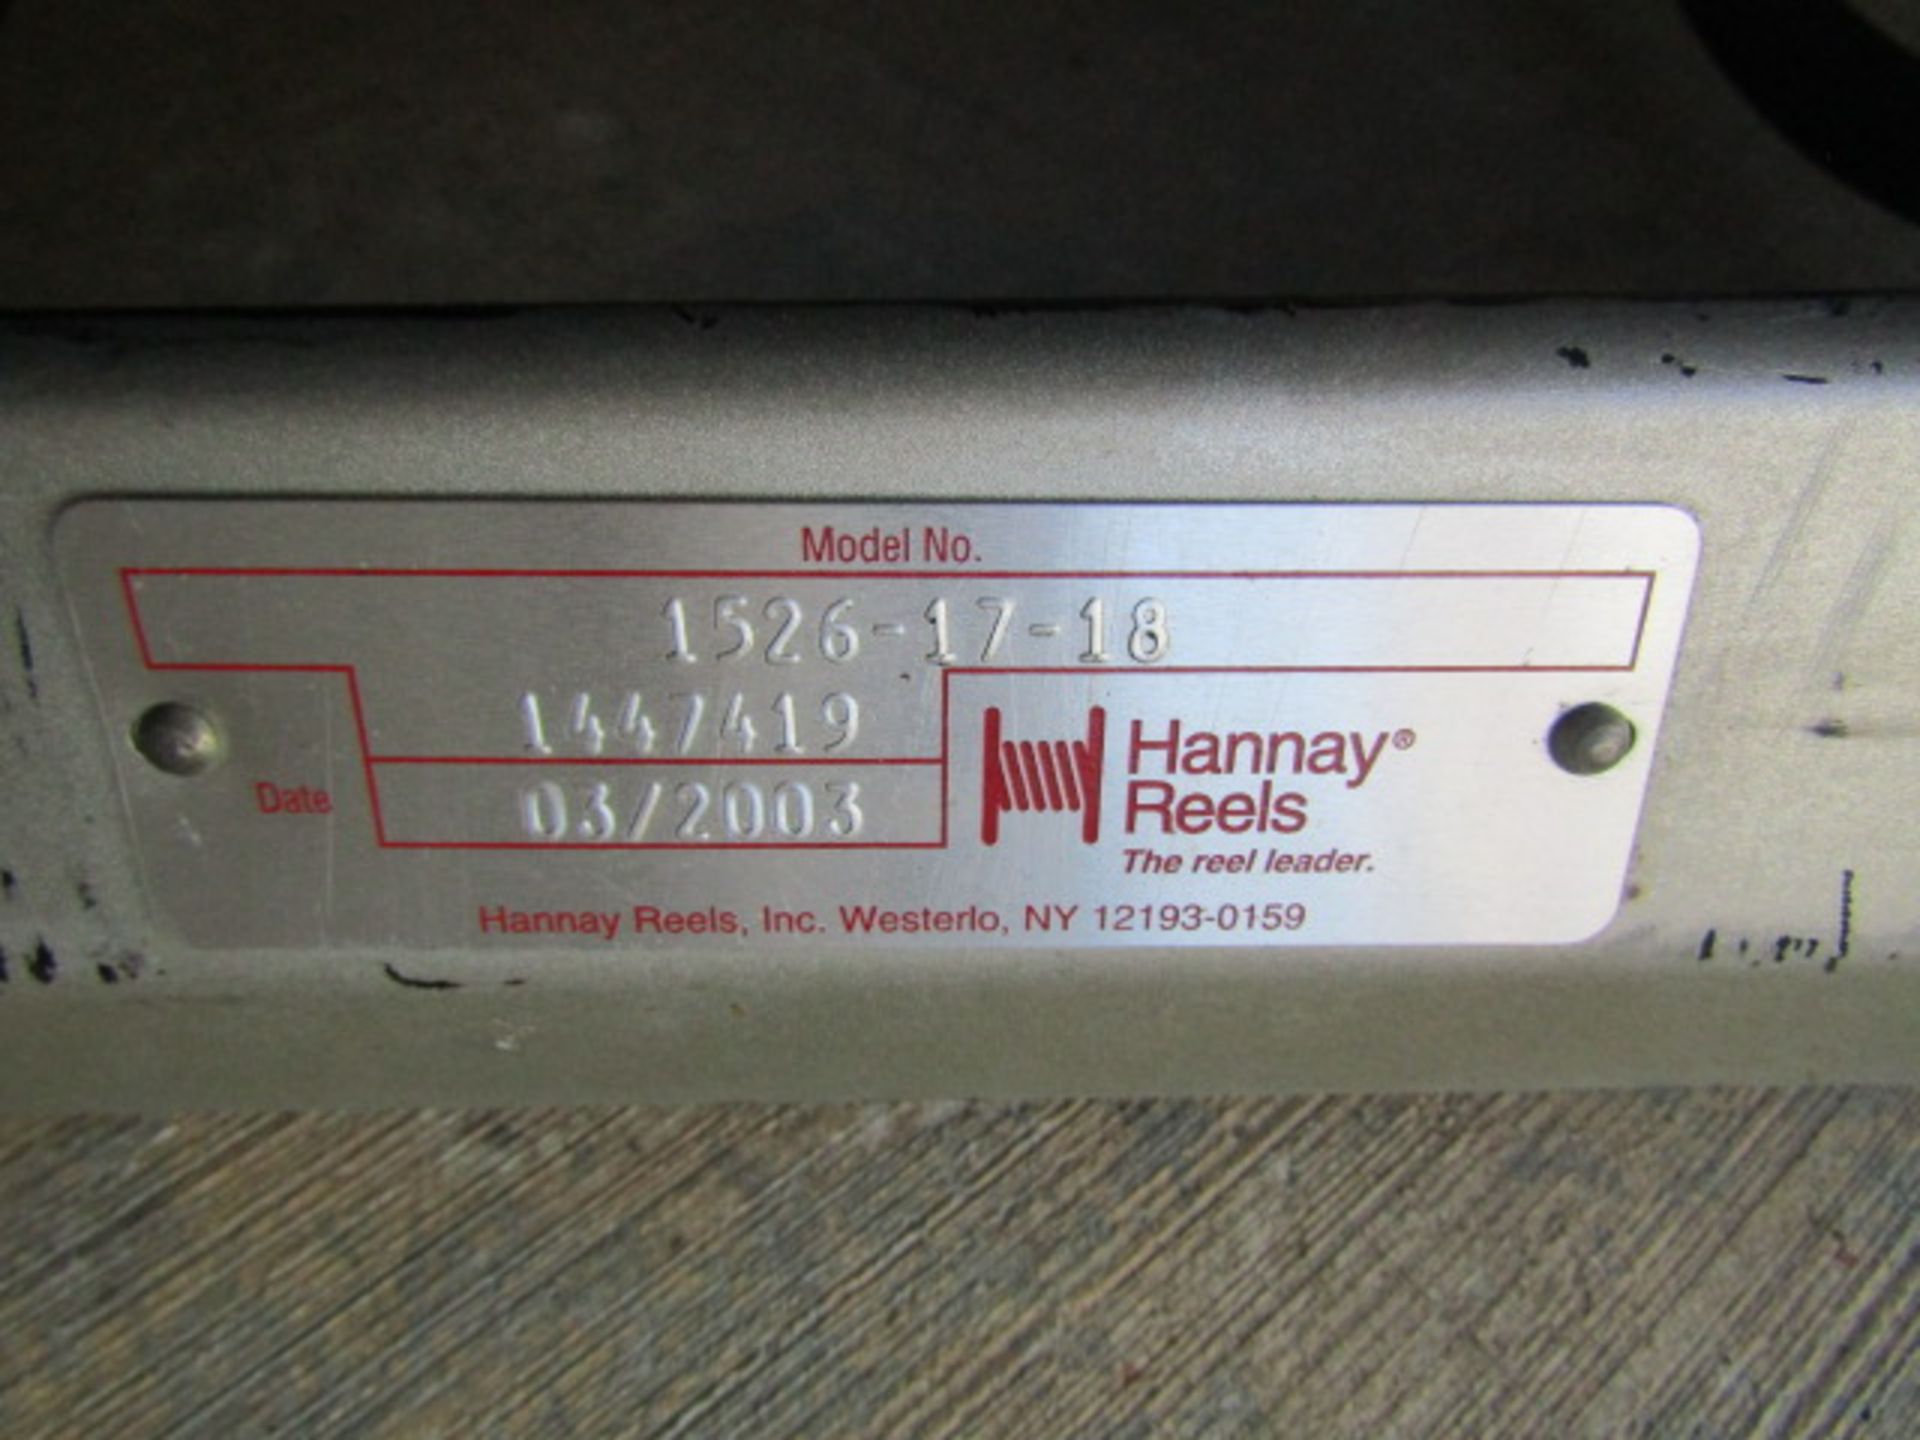 Hannay Model 1526-17-18 Water Pressure Hose & Reel, Manufacture Date 2003, - Image 2 of 3